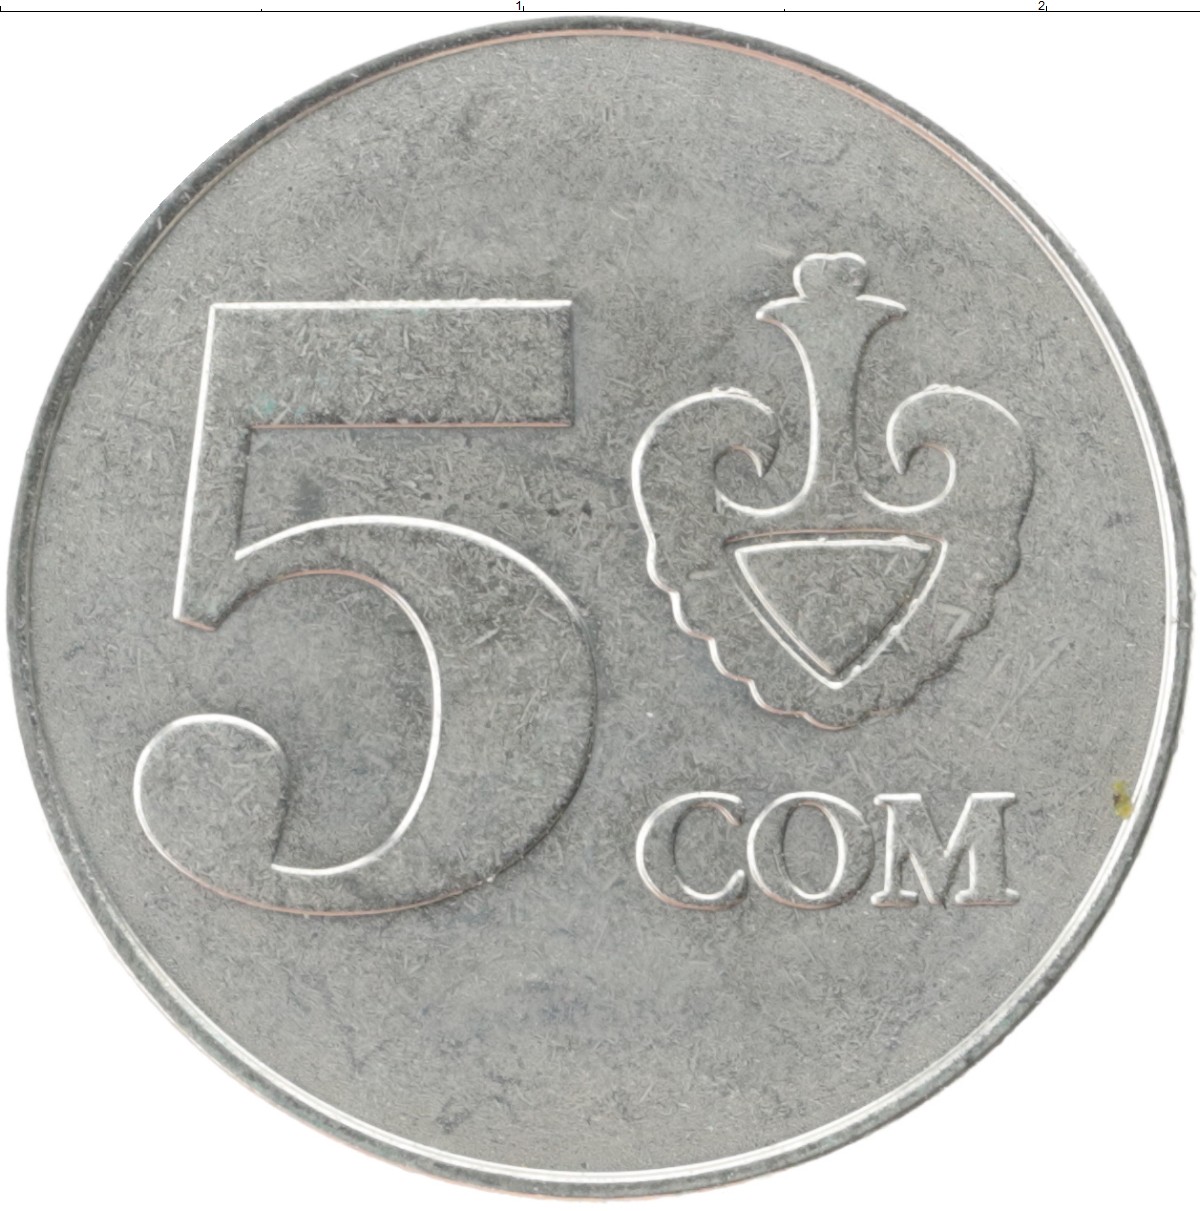 1000 1 ру. Монетка Киргизия 5 сом. Киргизская монета 5. Валюта Кыргызстана монеты. 1 Сом монета.